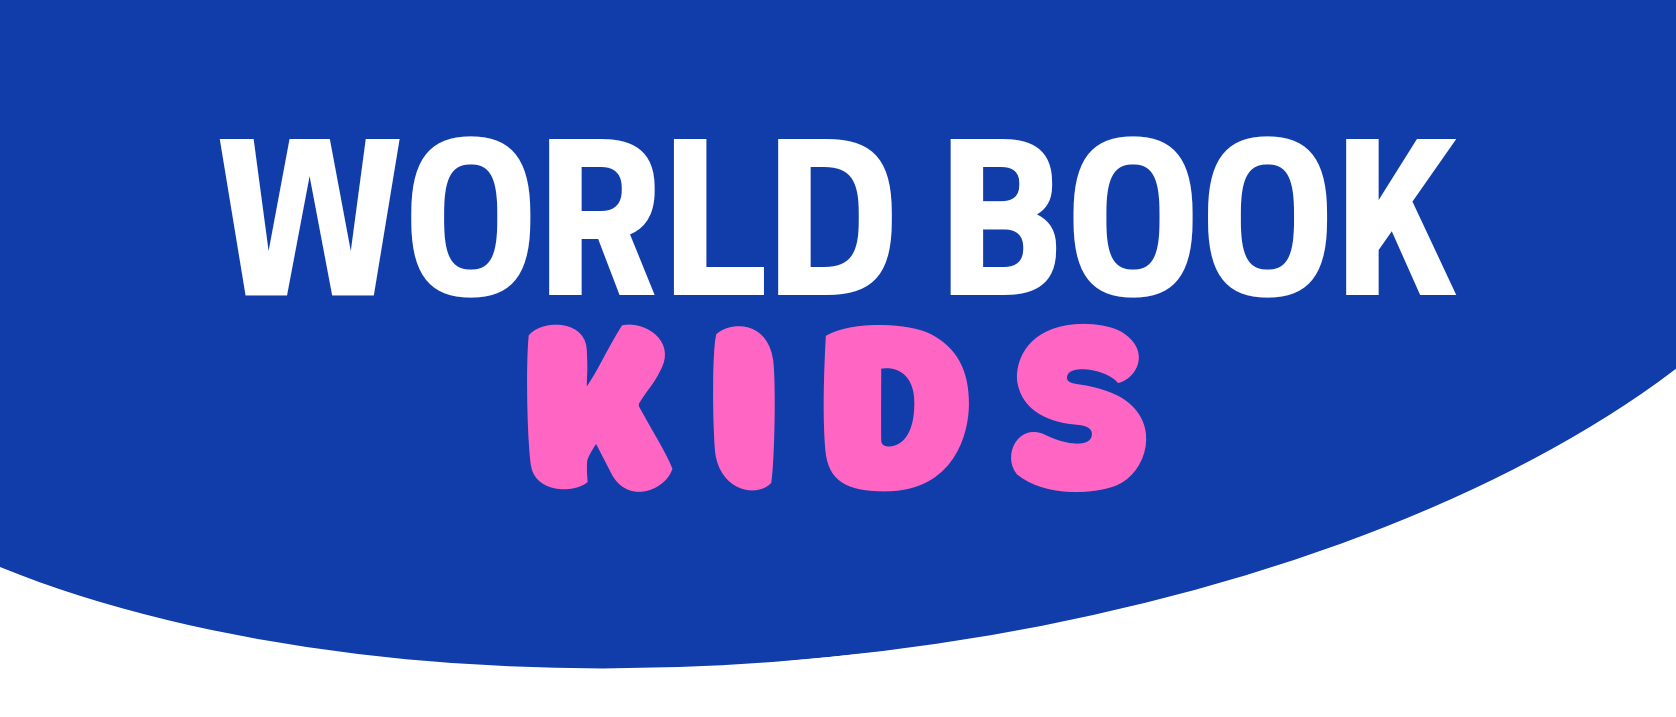 World Book Kids on blue background